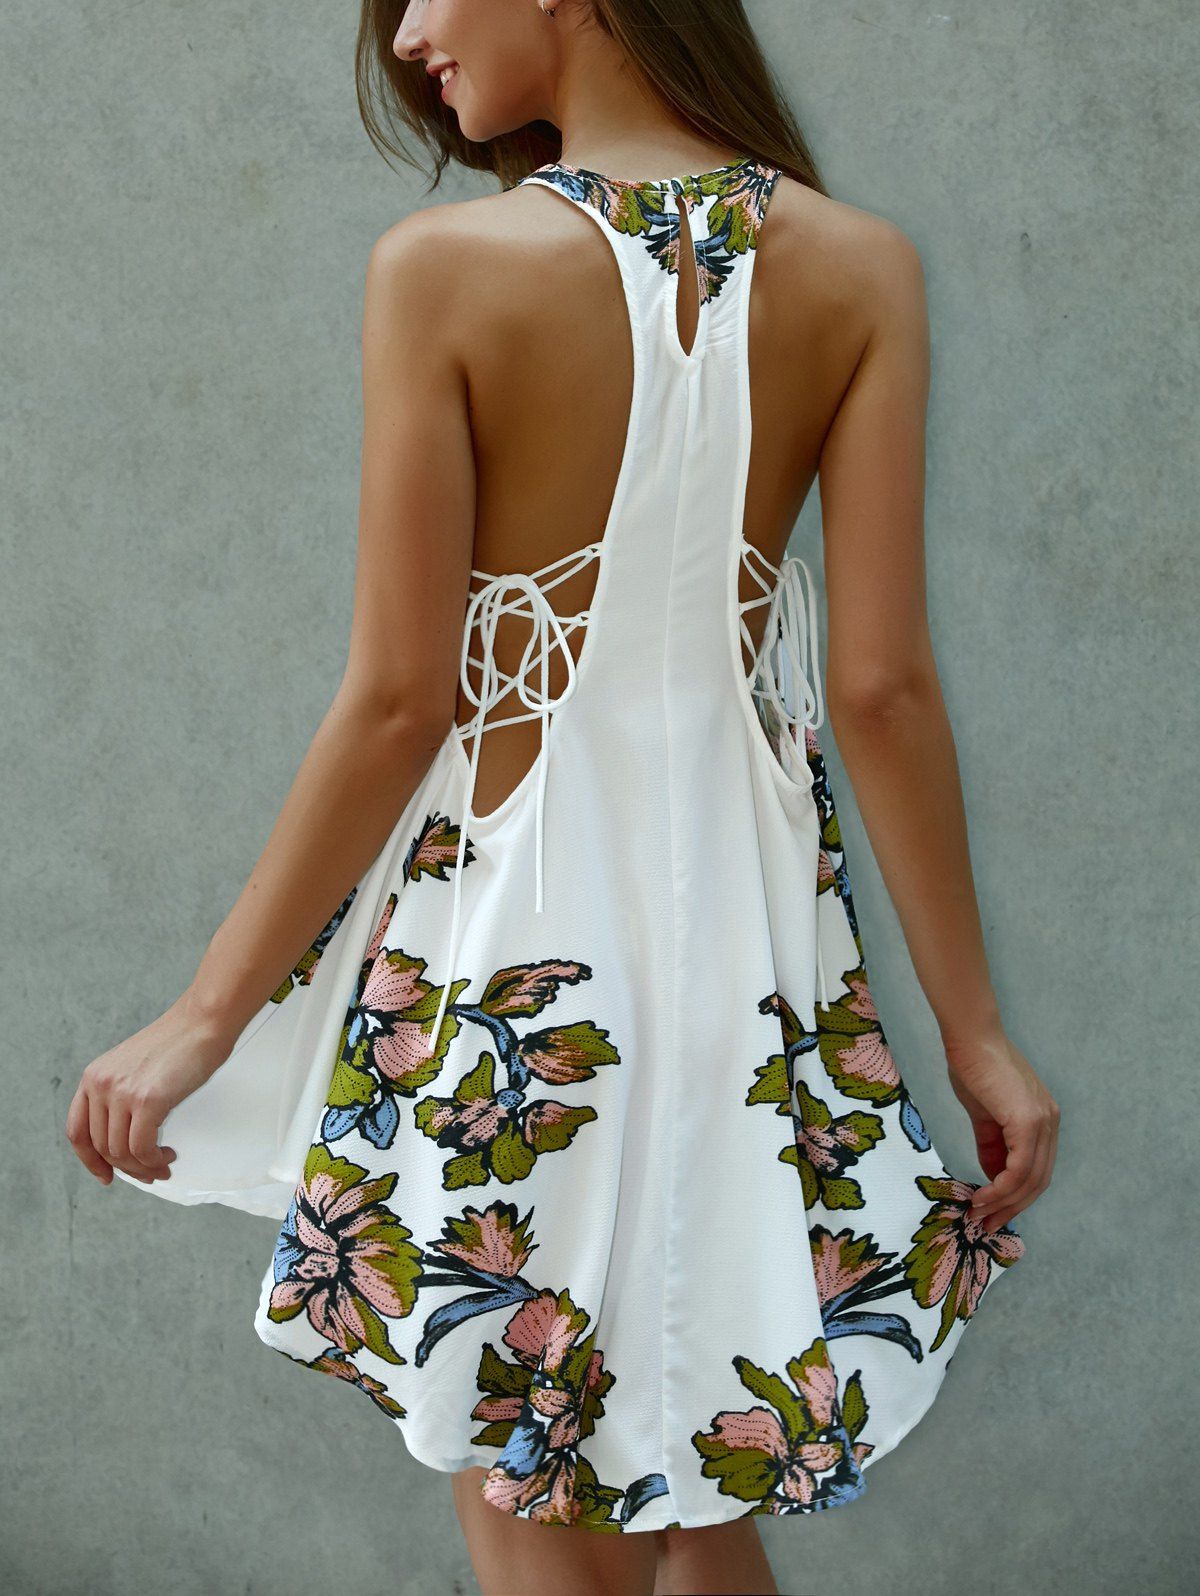 Hot Lace-Up Asymmetrical Cut Out Floral Dress  